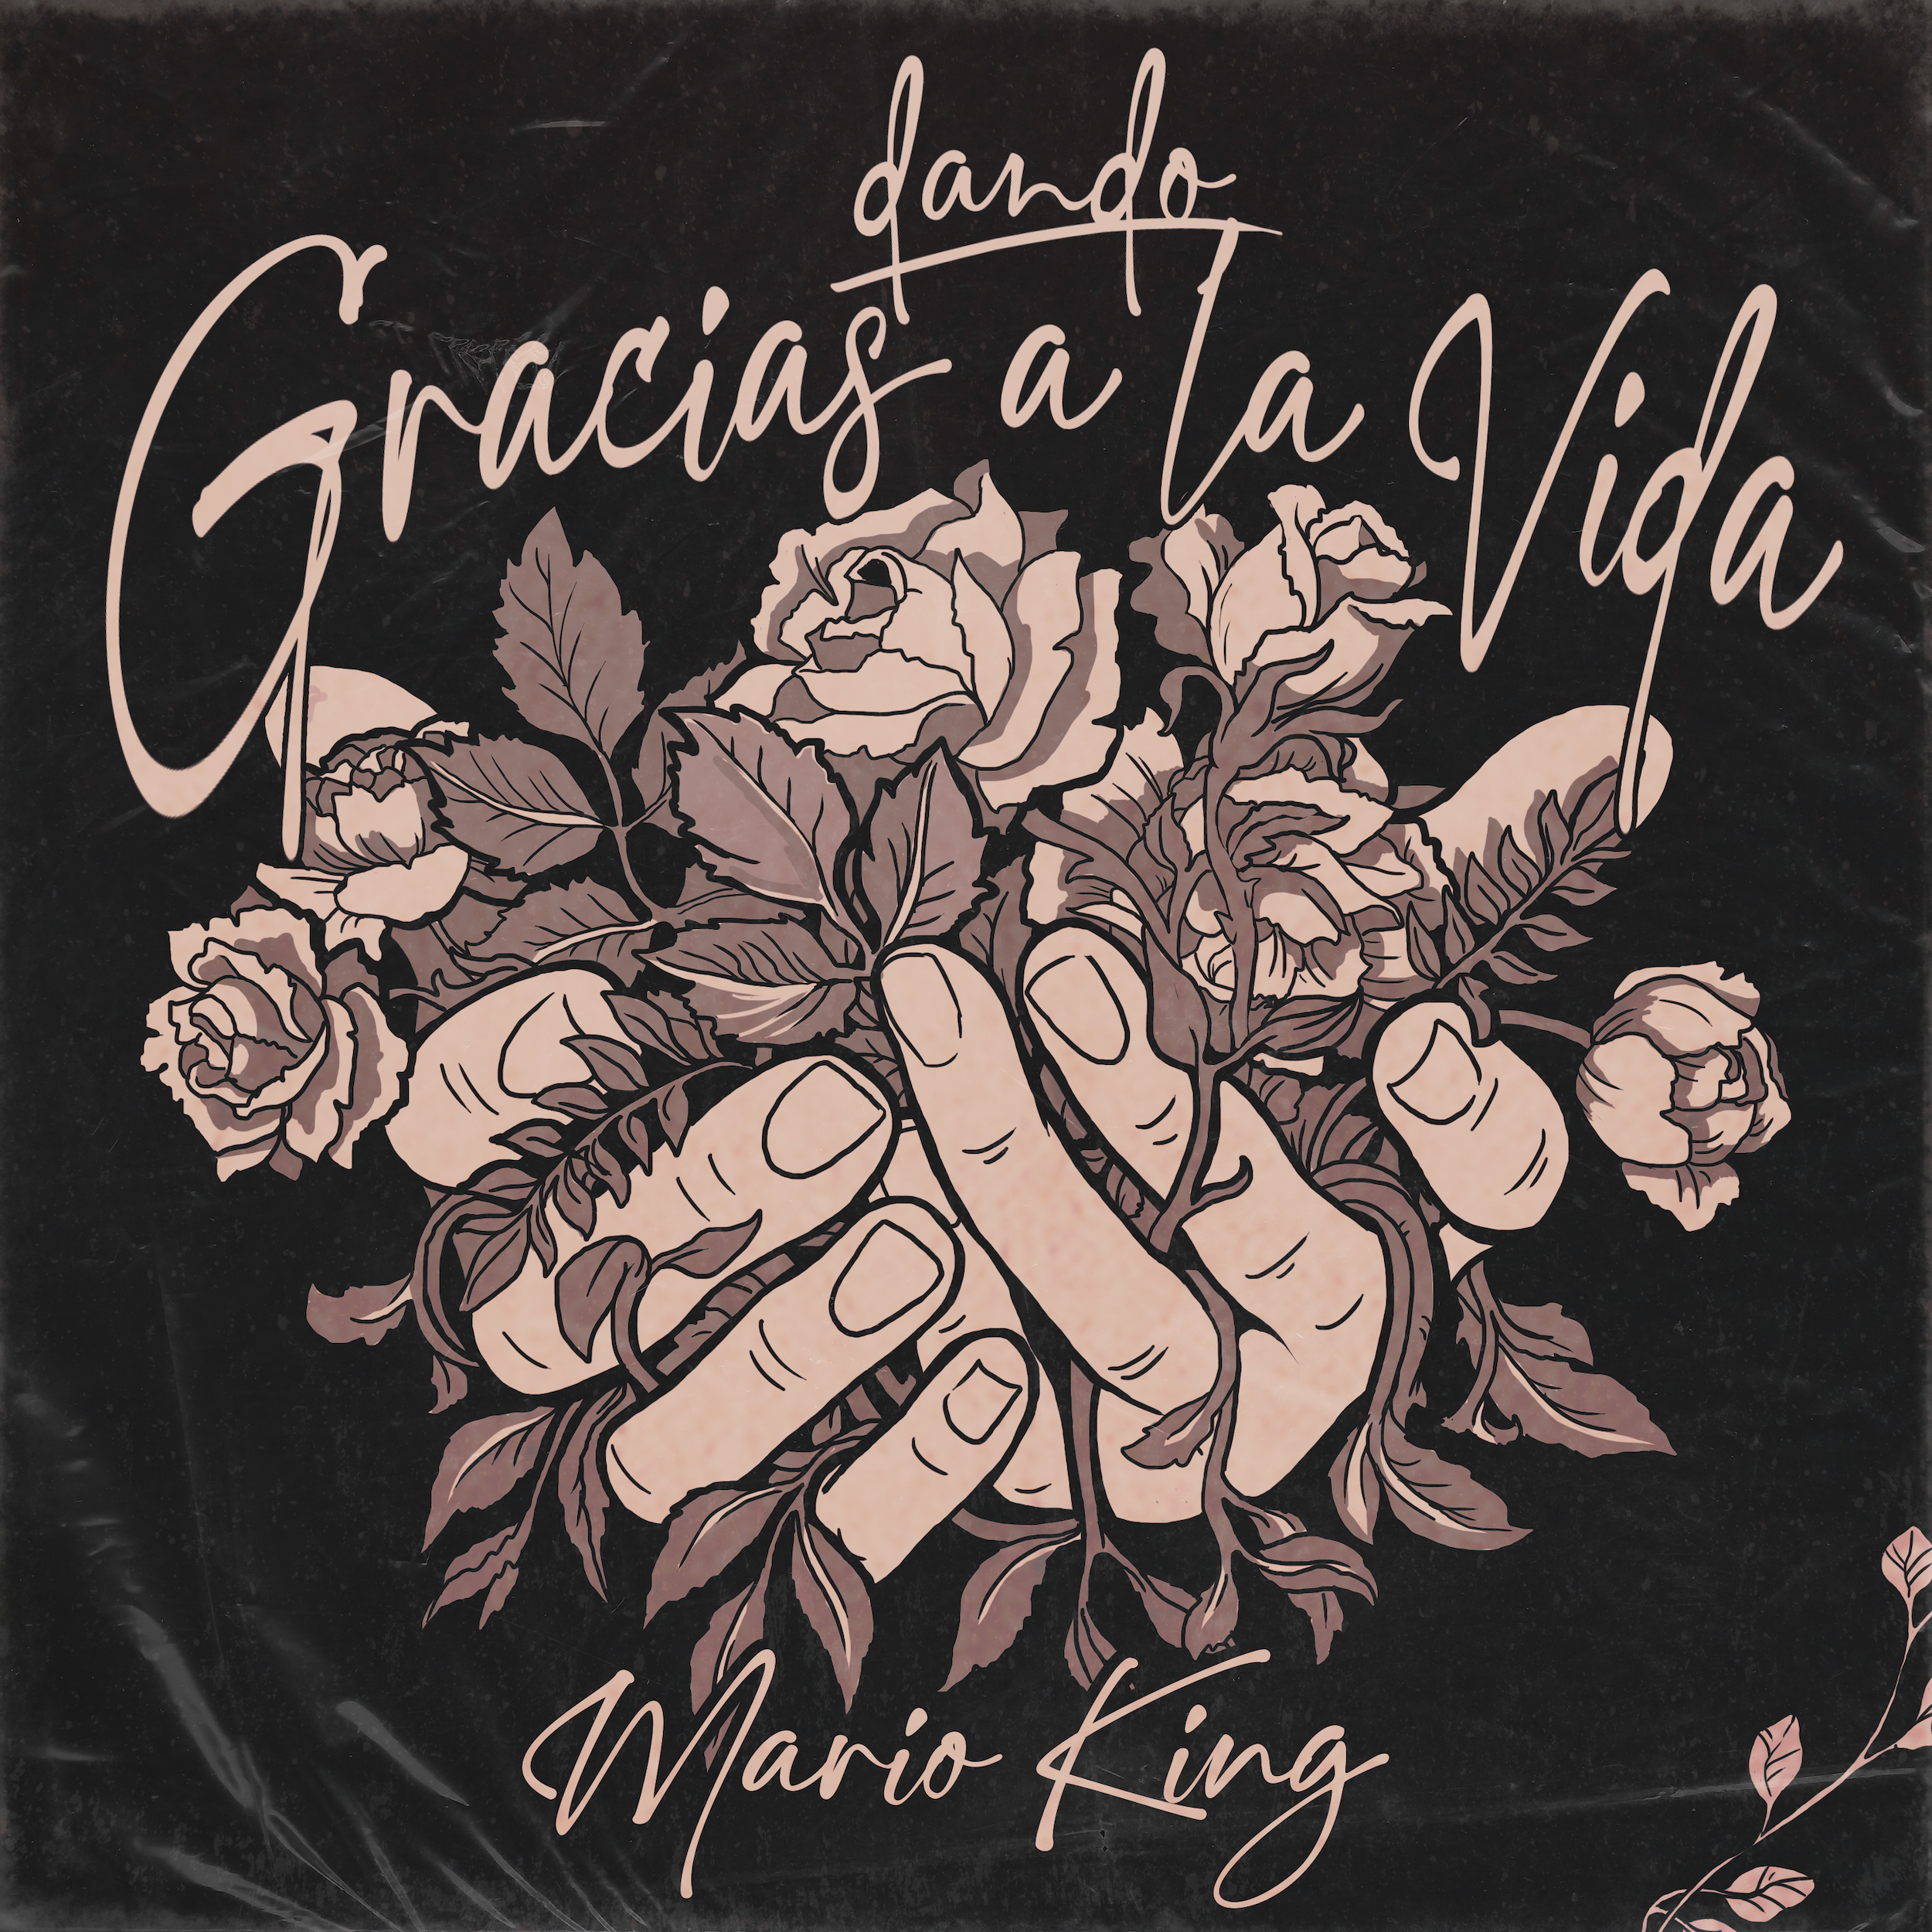 Mario King - Dando gracias a la vida (Single)